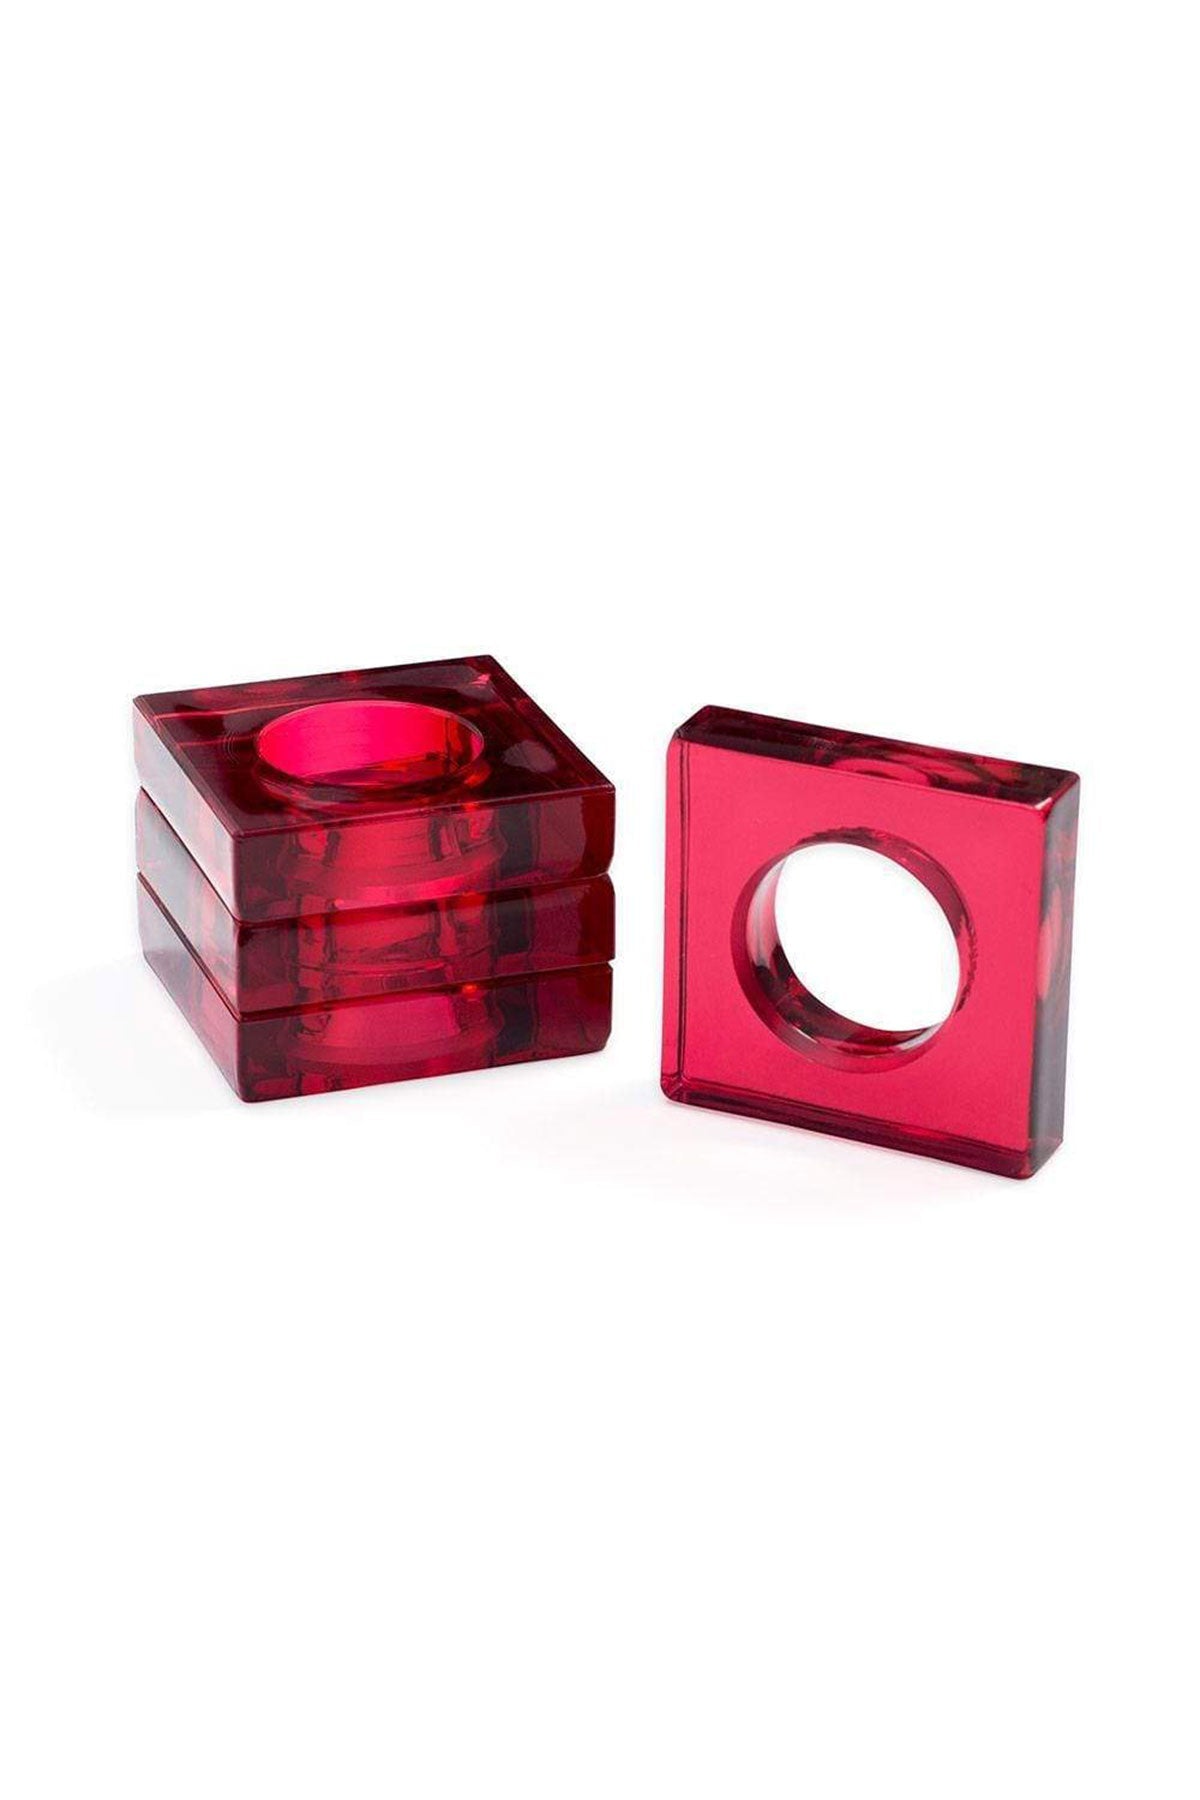 Acrylic Napkin Rings in Cranberry - Set of 4 - shop-olivia.com